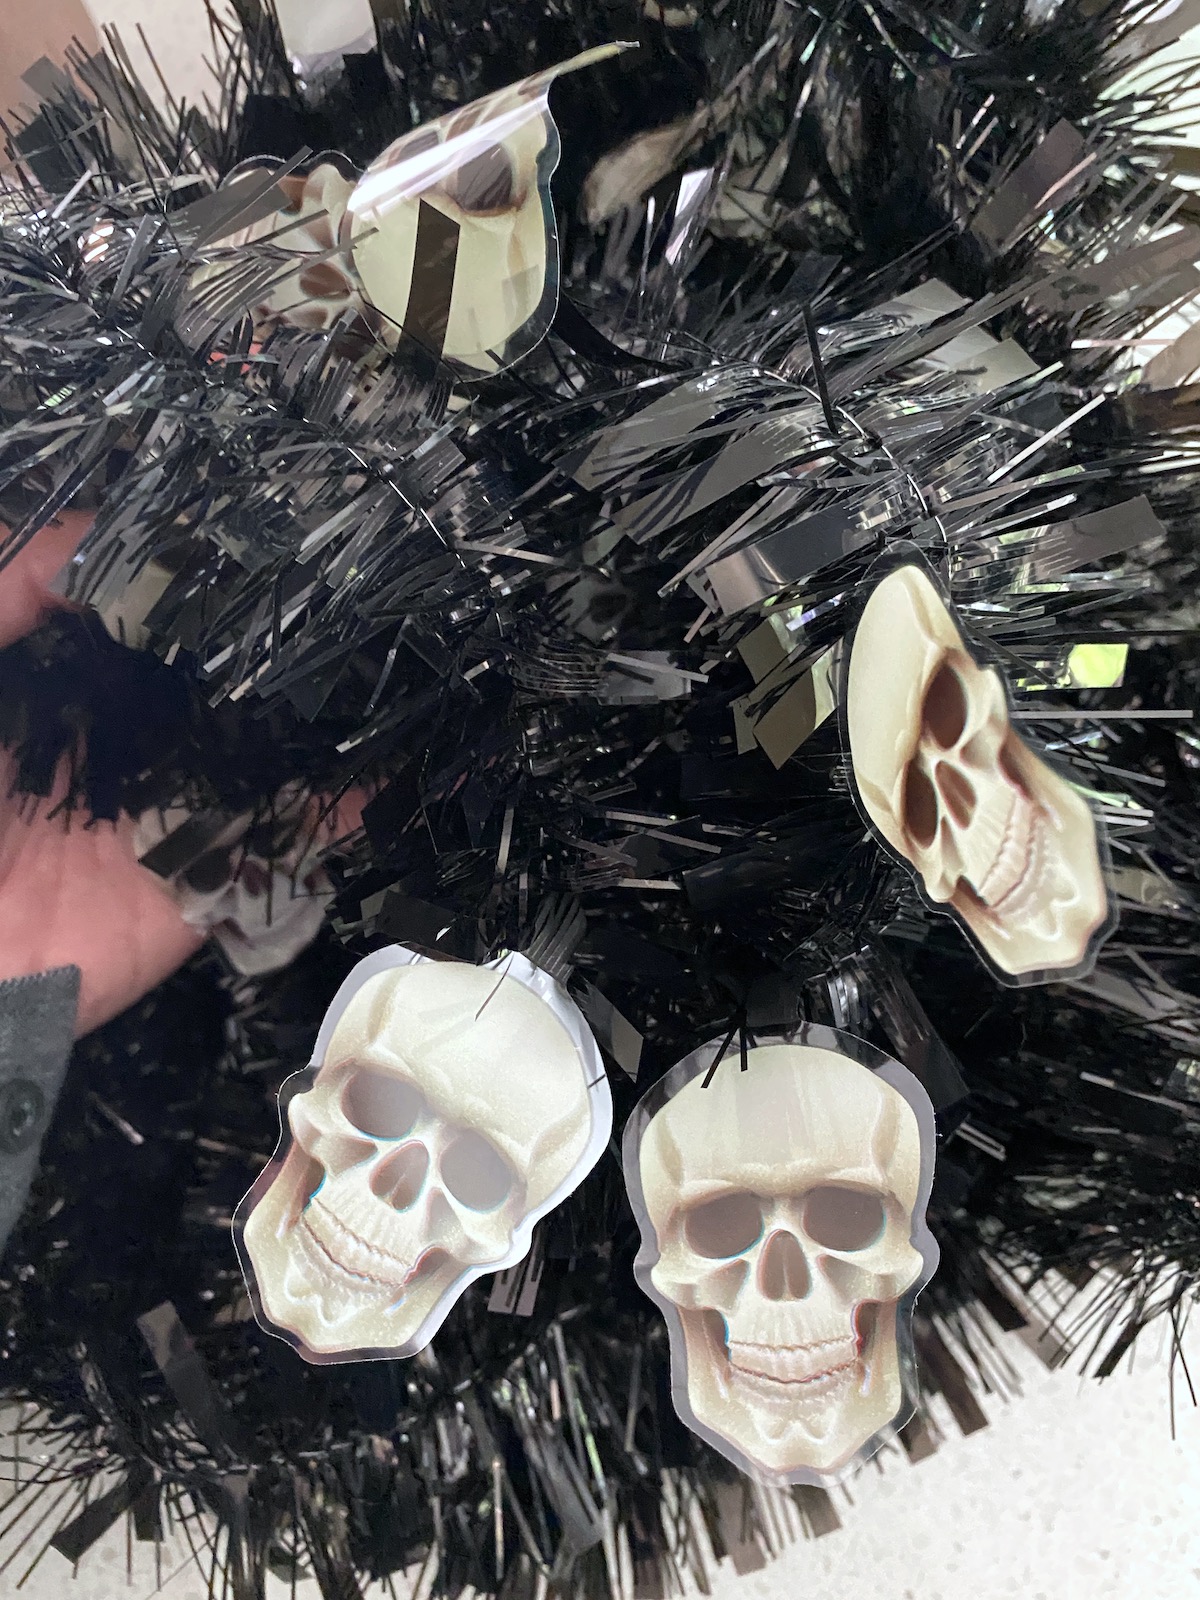 Black garland with plastic skulls